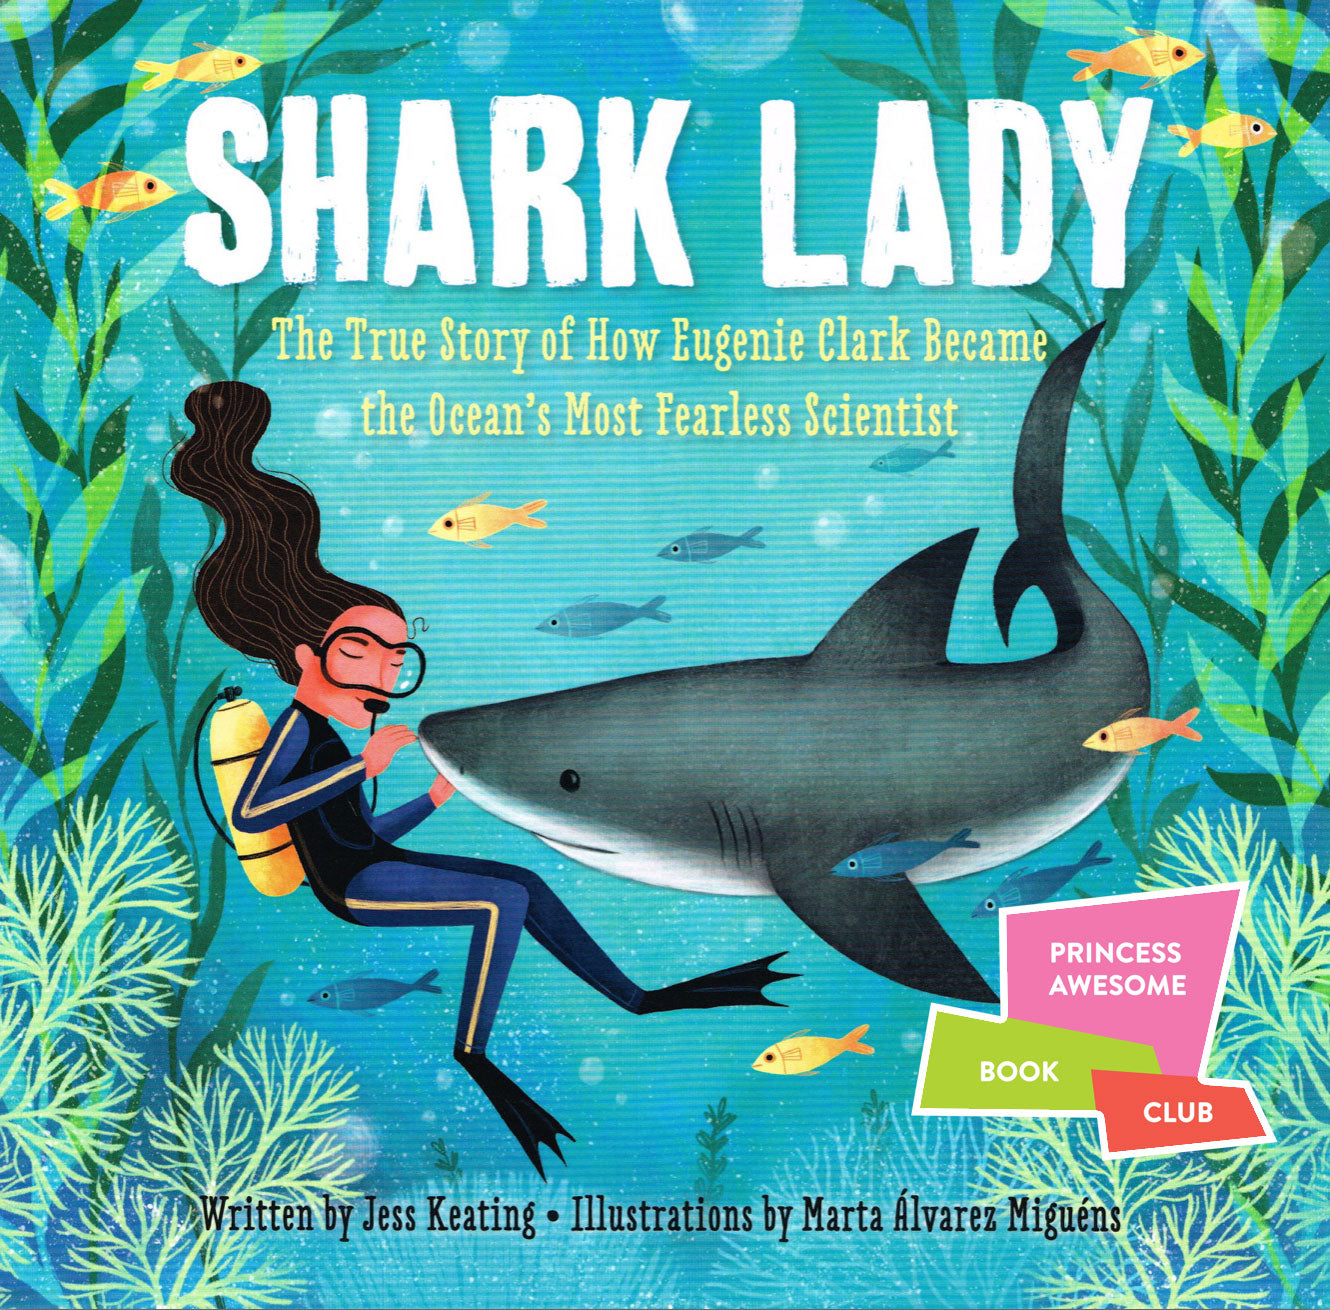 The Princess Awesome Book Club celebrates "Shark Lady"